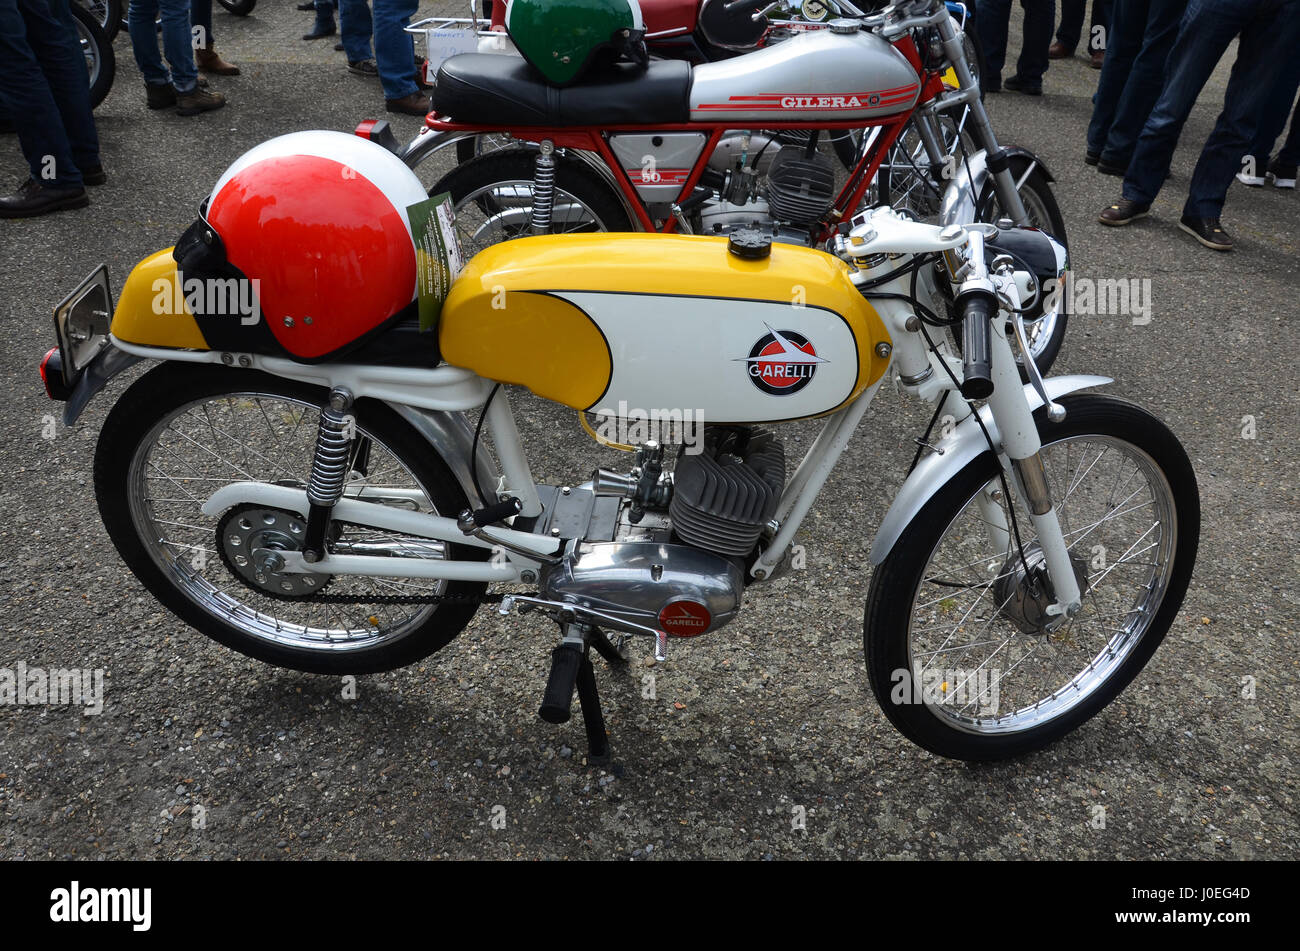 Garelli 50cc motorbike Stock Photo - Alamy